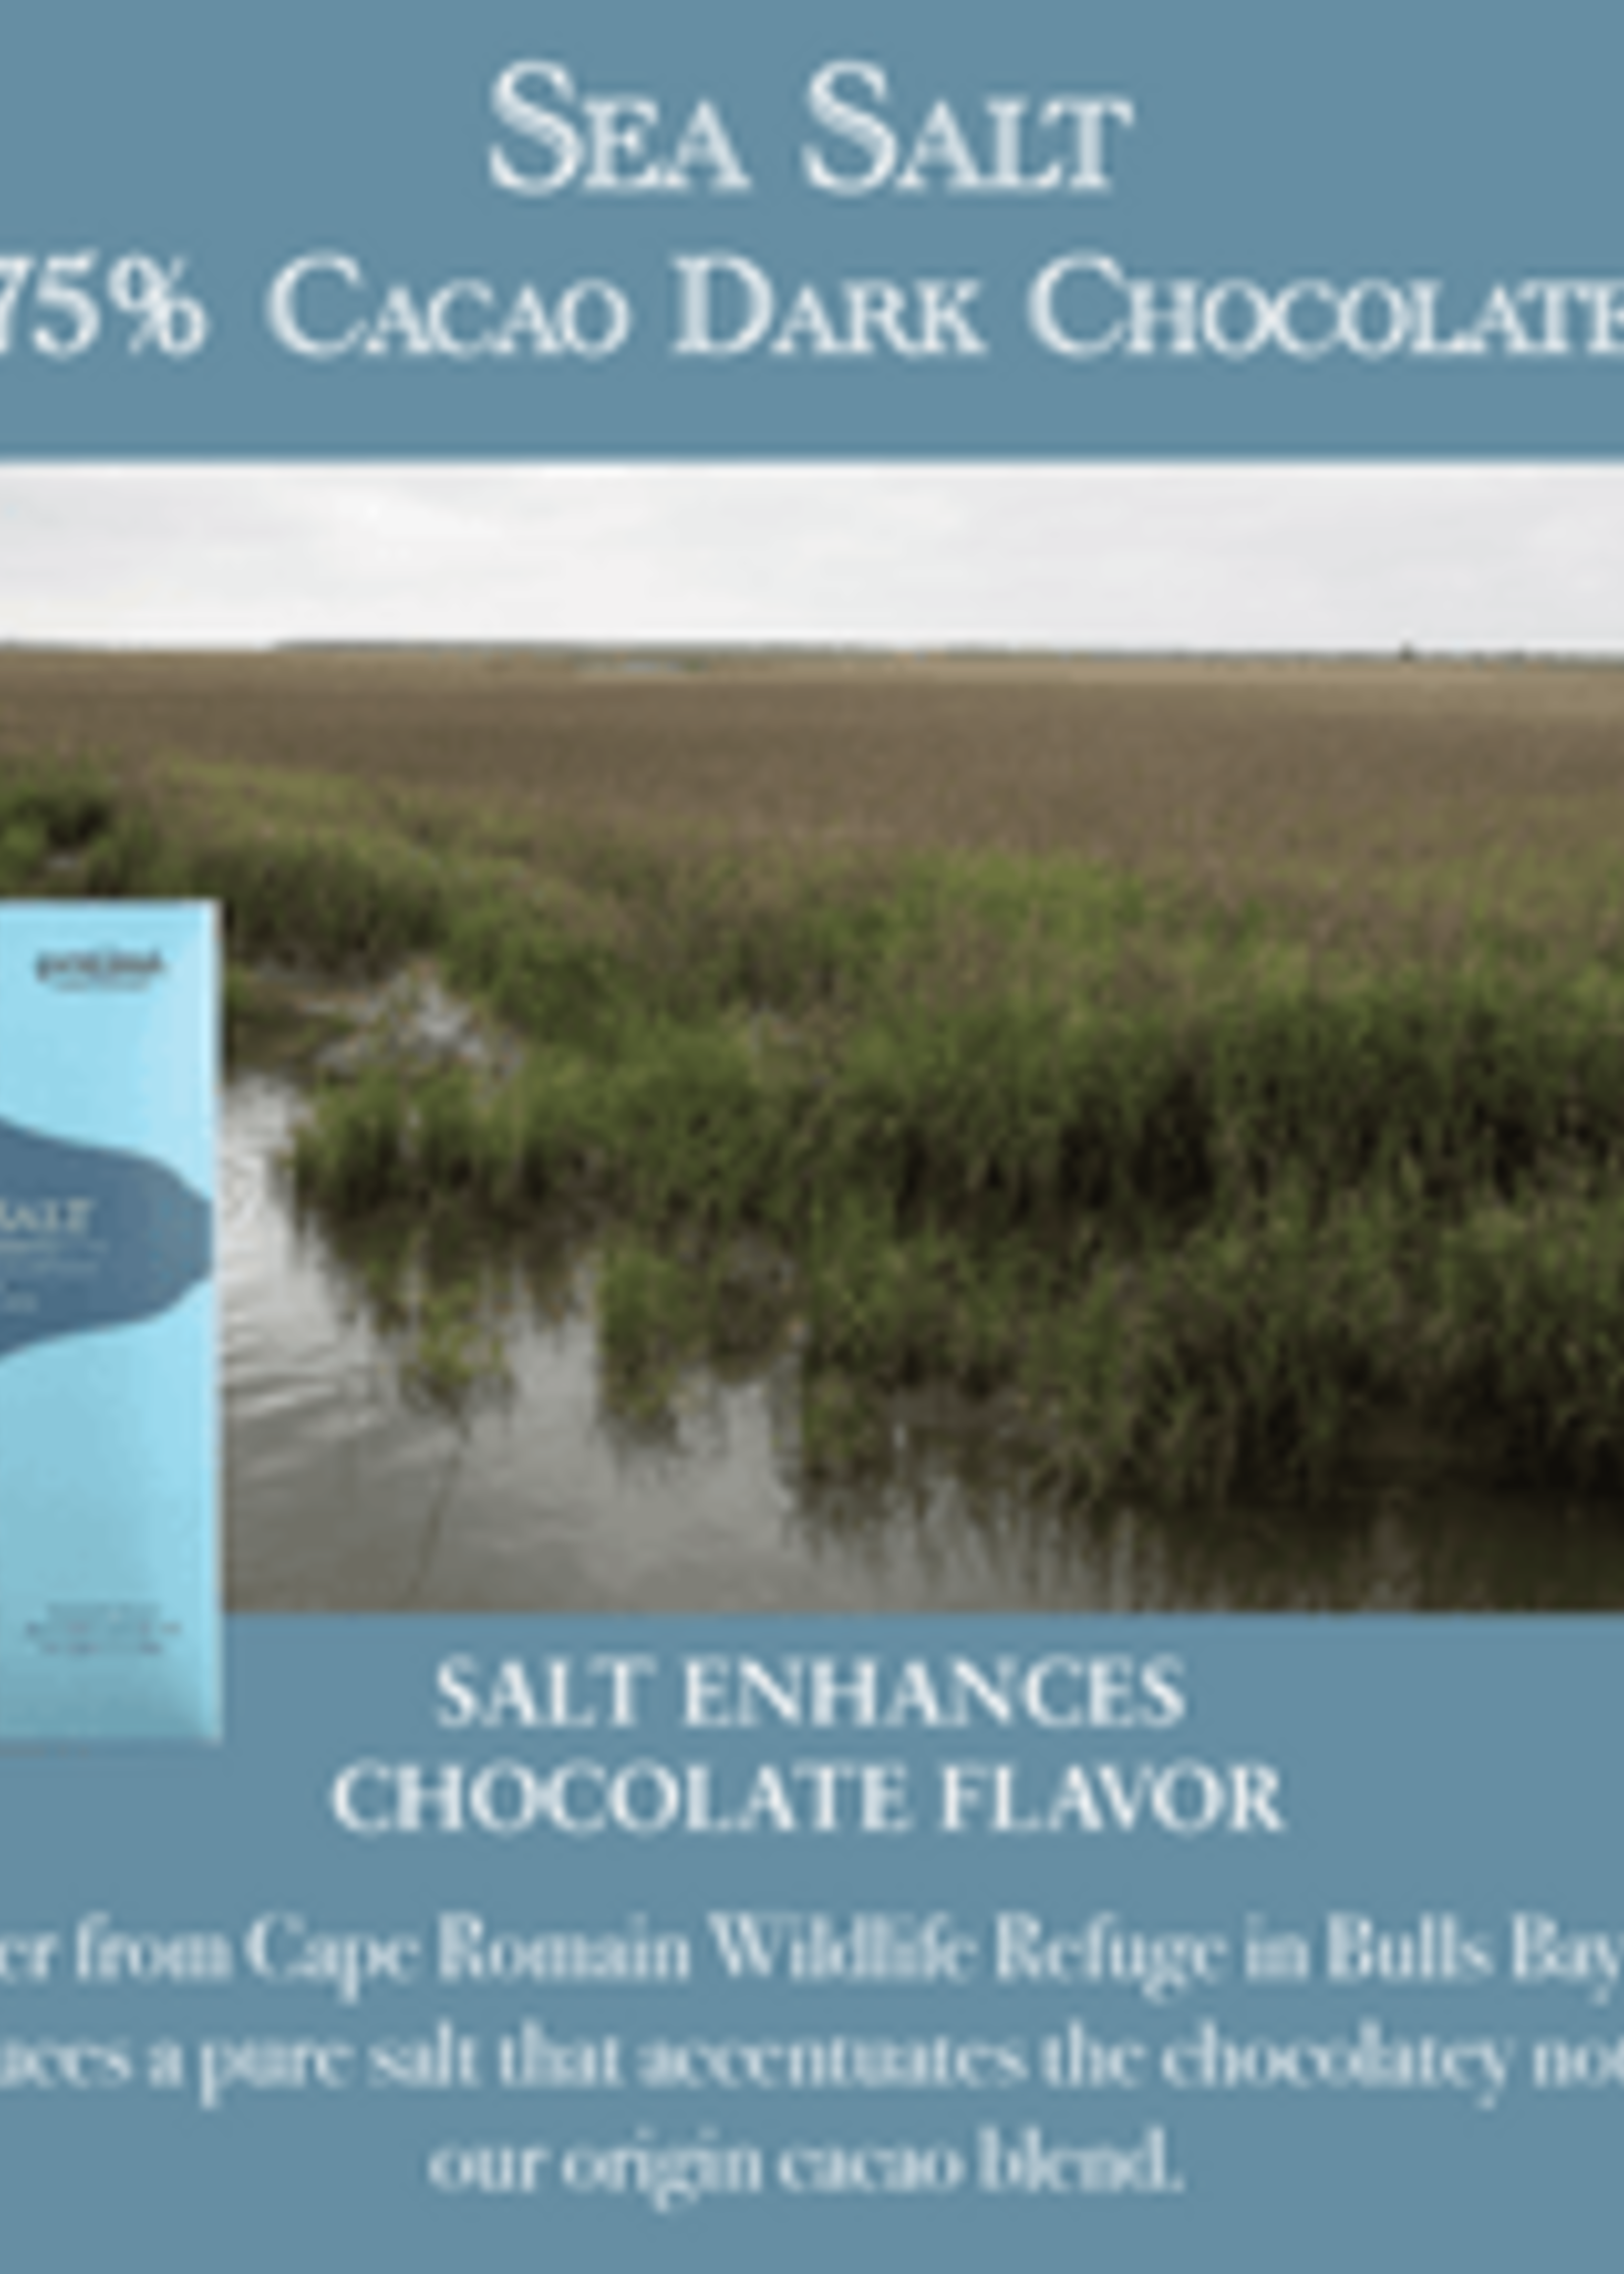 French Broad Chocolates 28g Sea Salt Dark Chocolate Bar